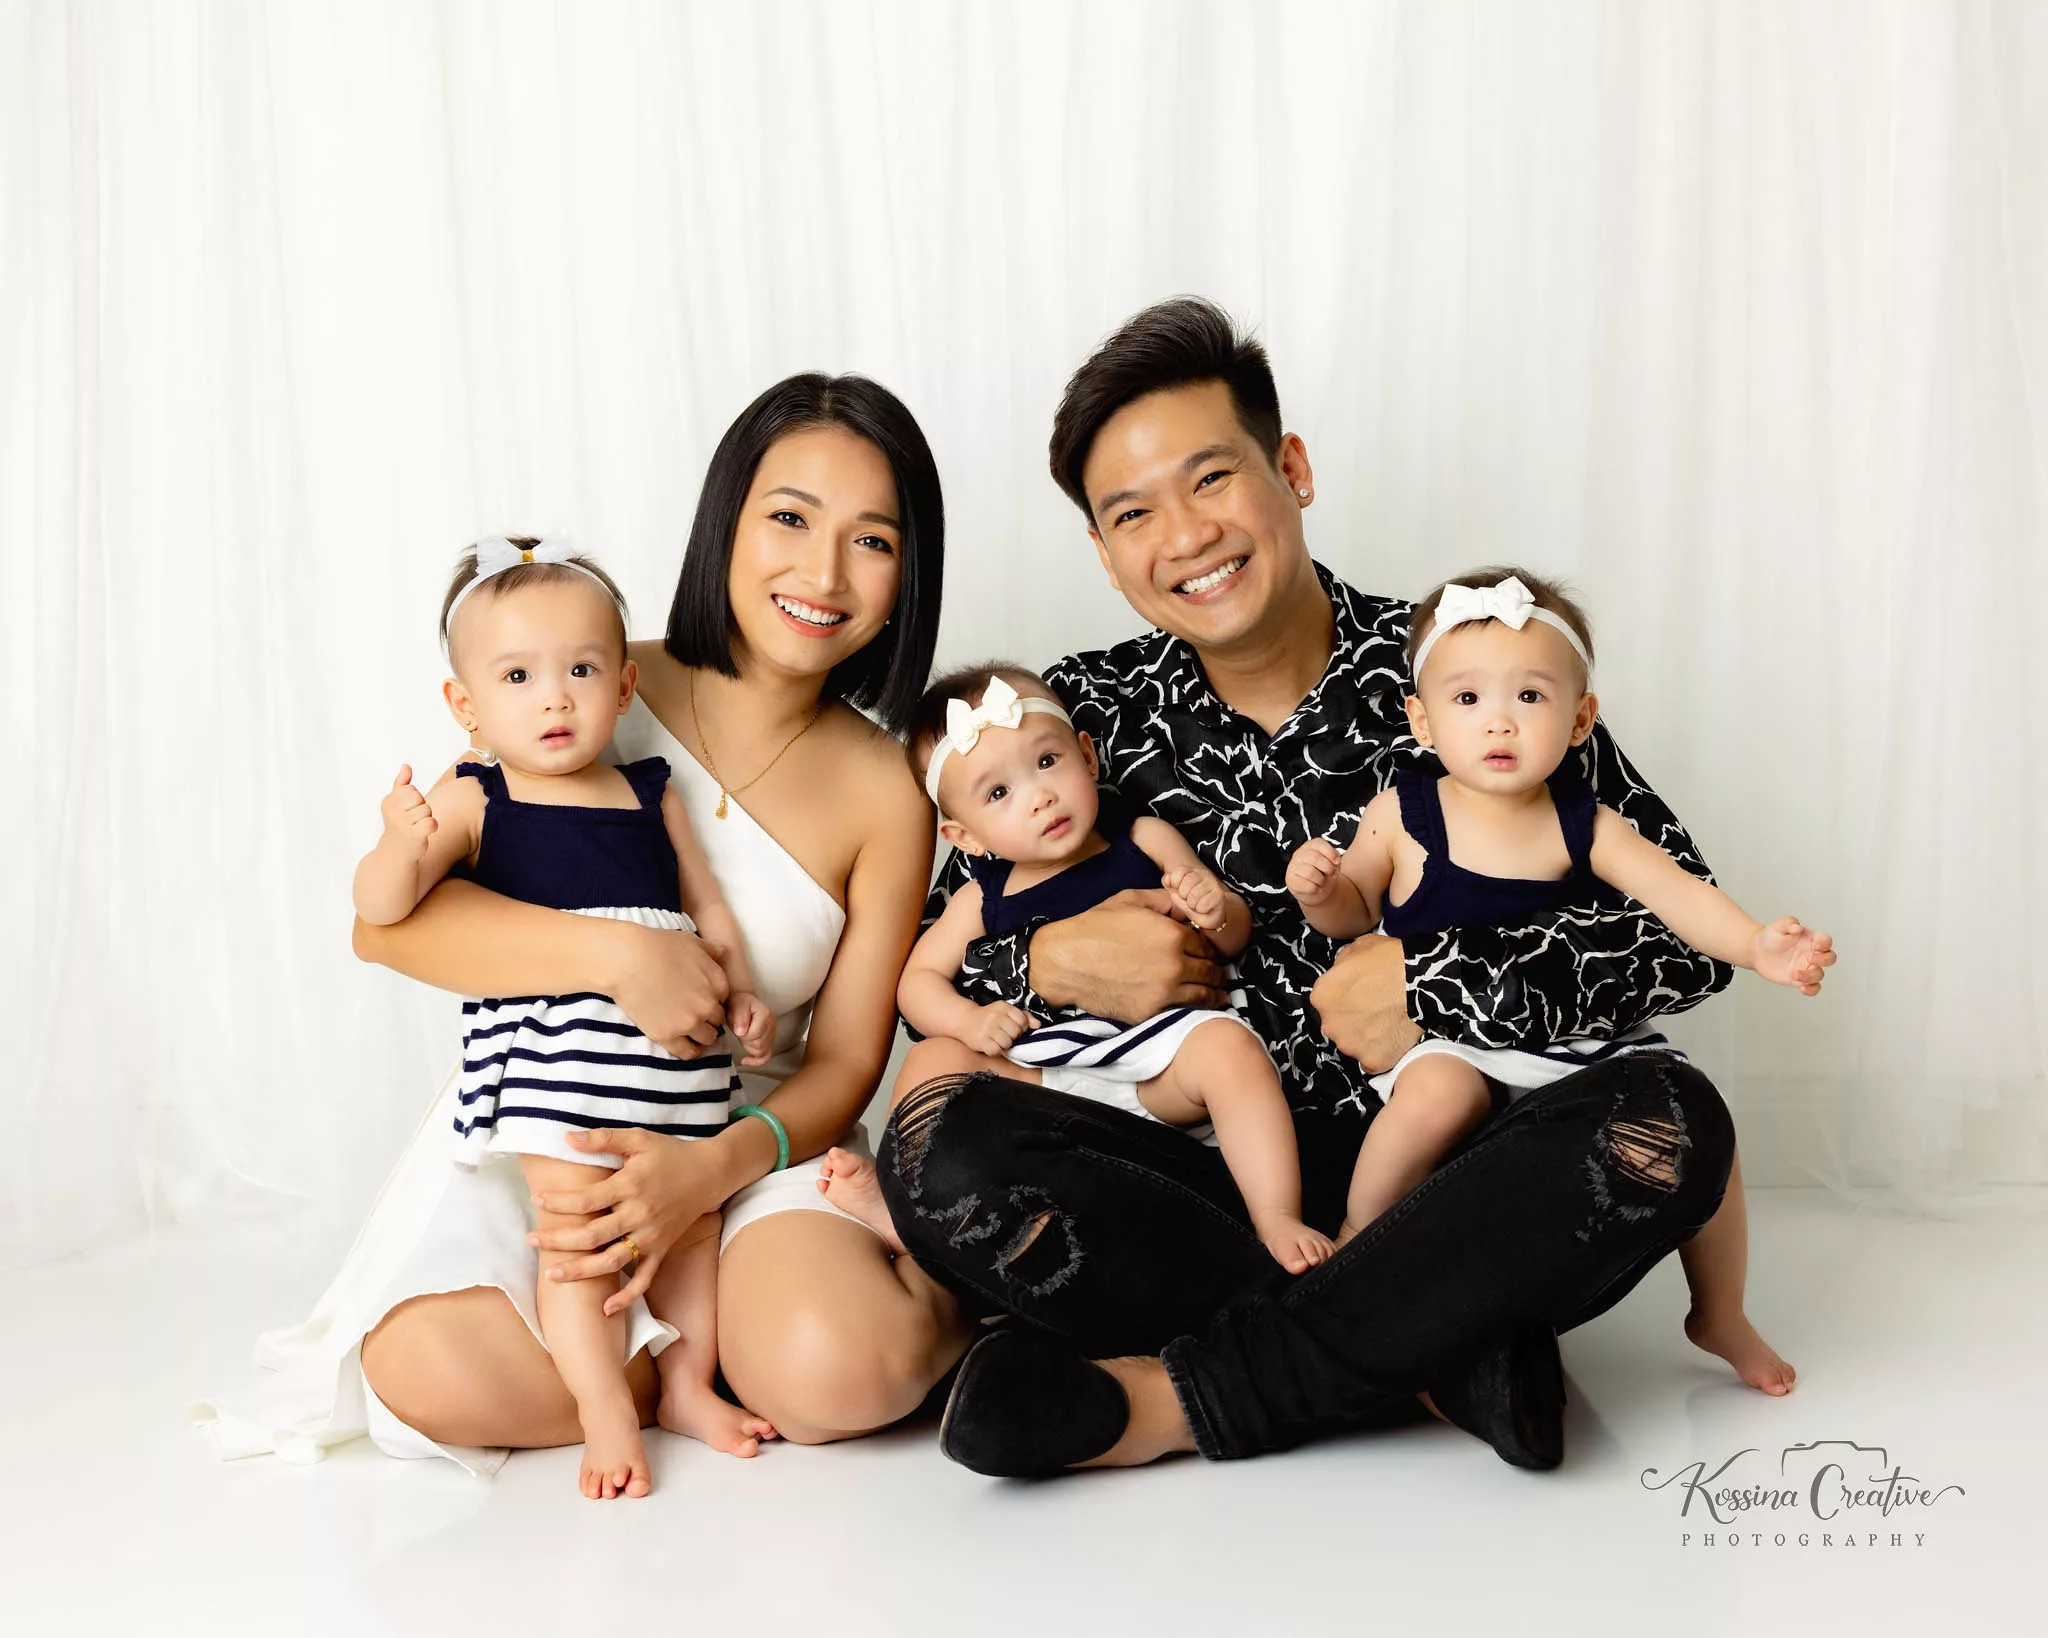 orlando photo studio family photographer studio portraits generations triplets mom and dad white and black